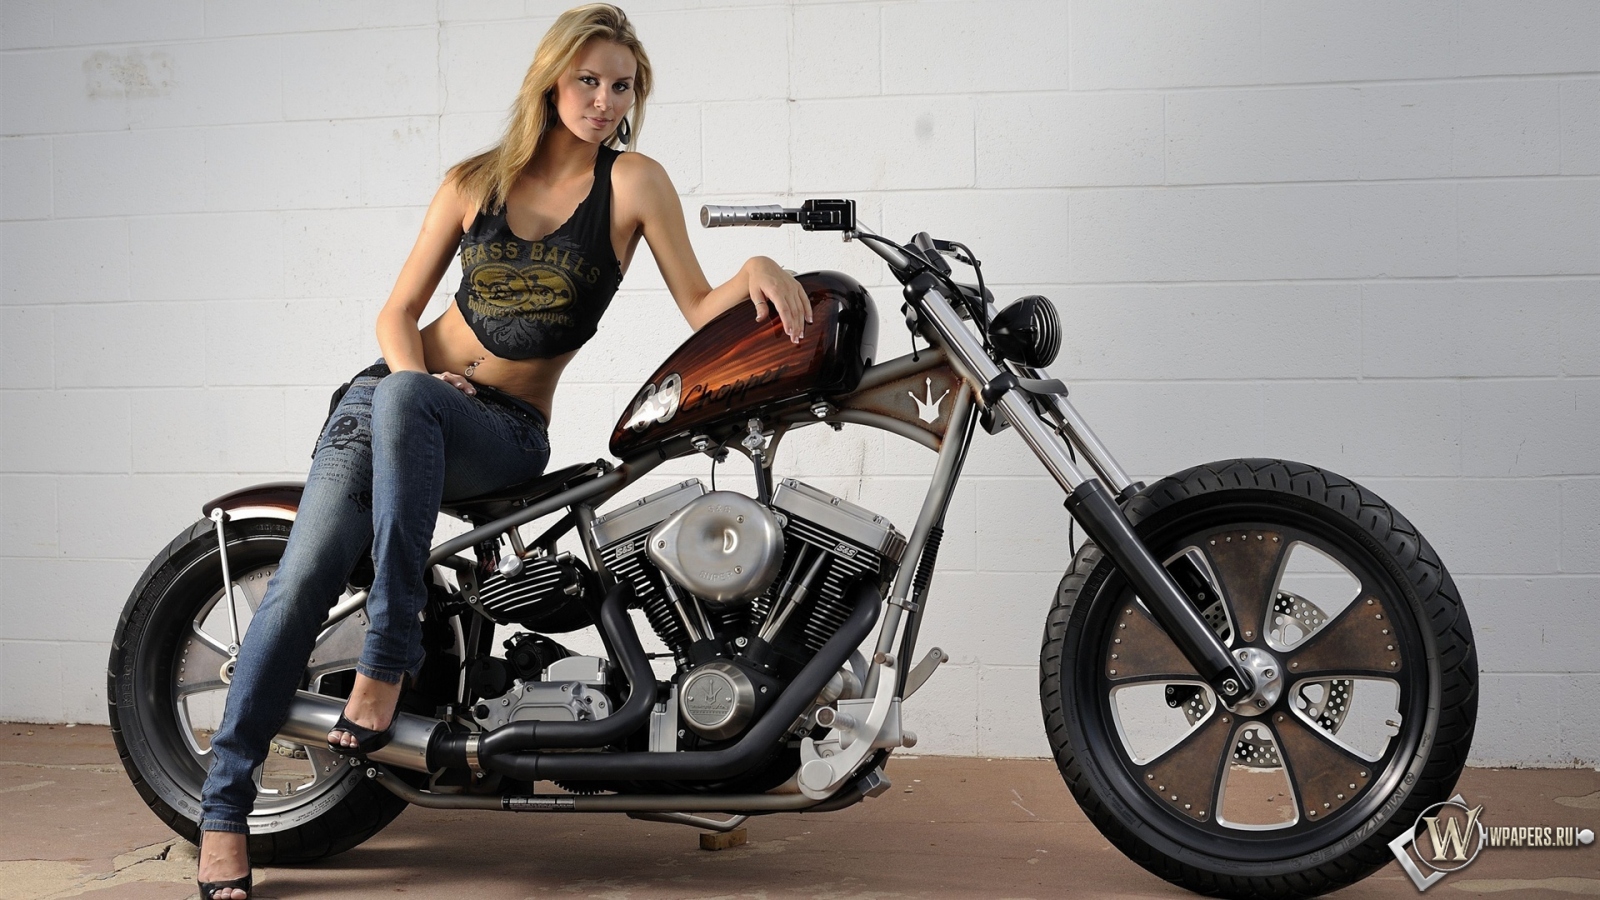 Девушка и Harley Davidson 1600x900